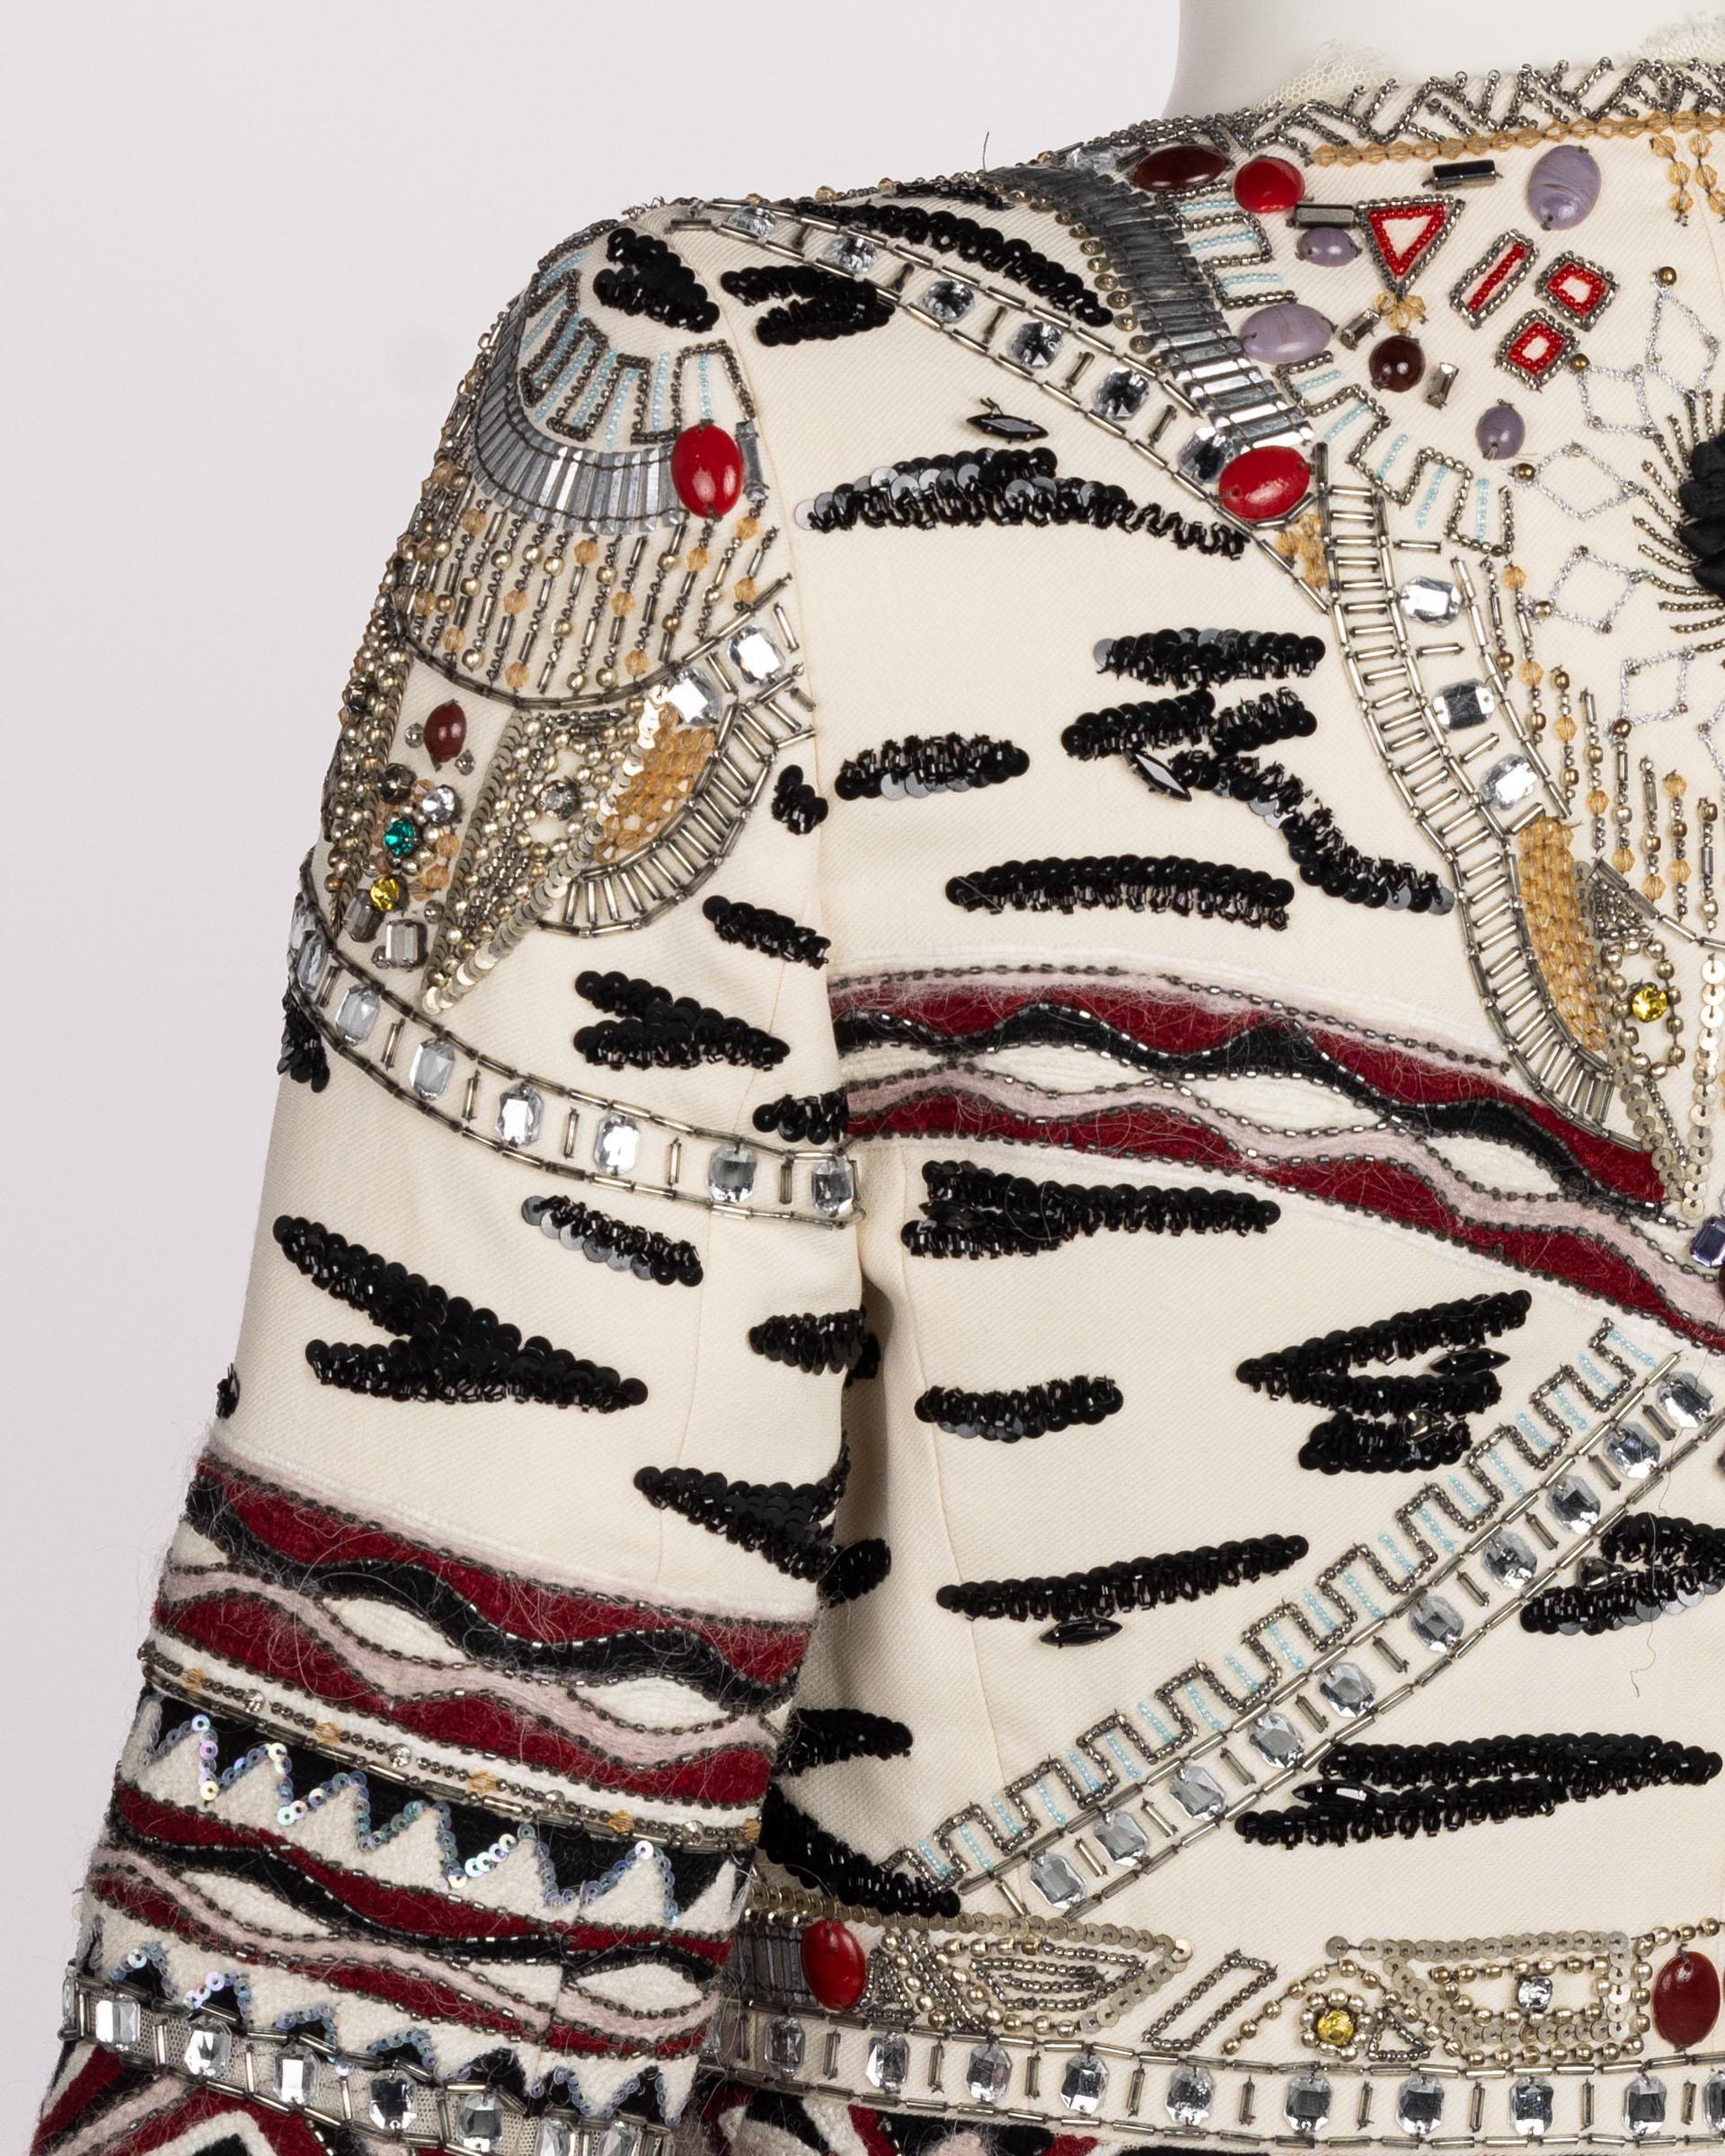  Emilio Pucci Embellished Wool Silk & Cotton Blend Jacket, Pre -Fall 2012 Runway 9